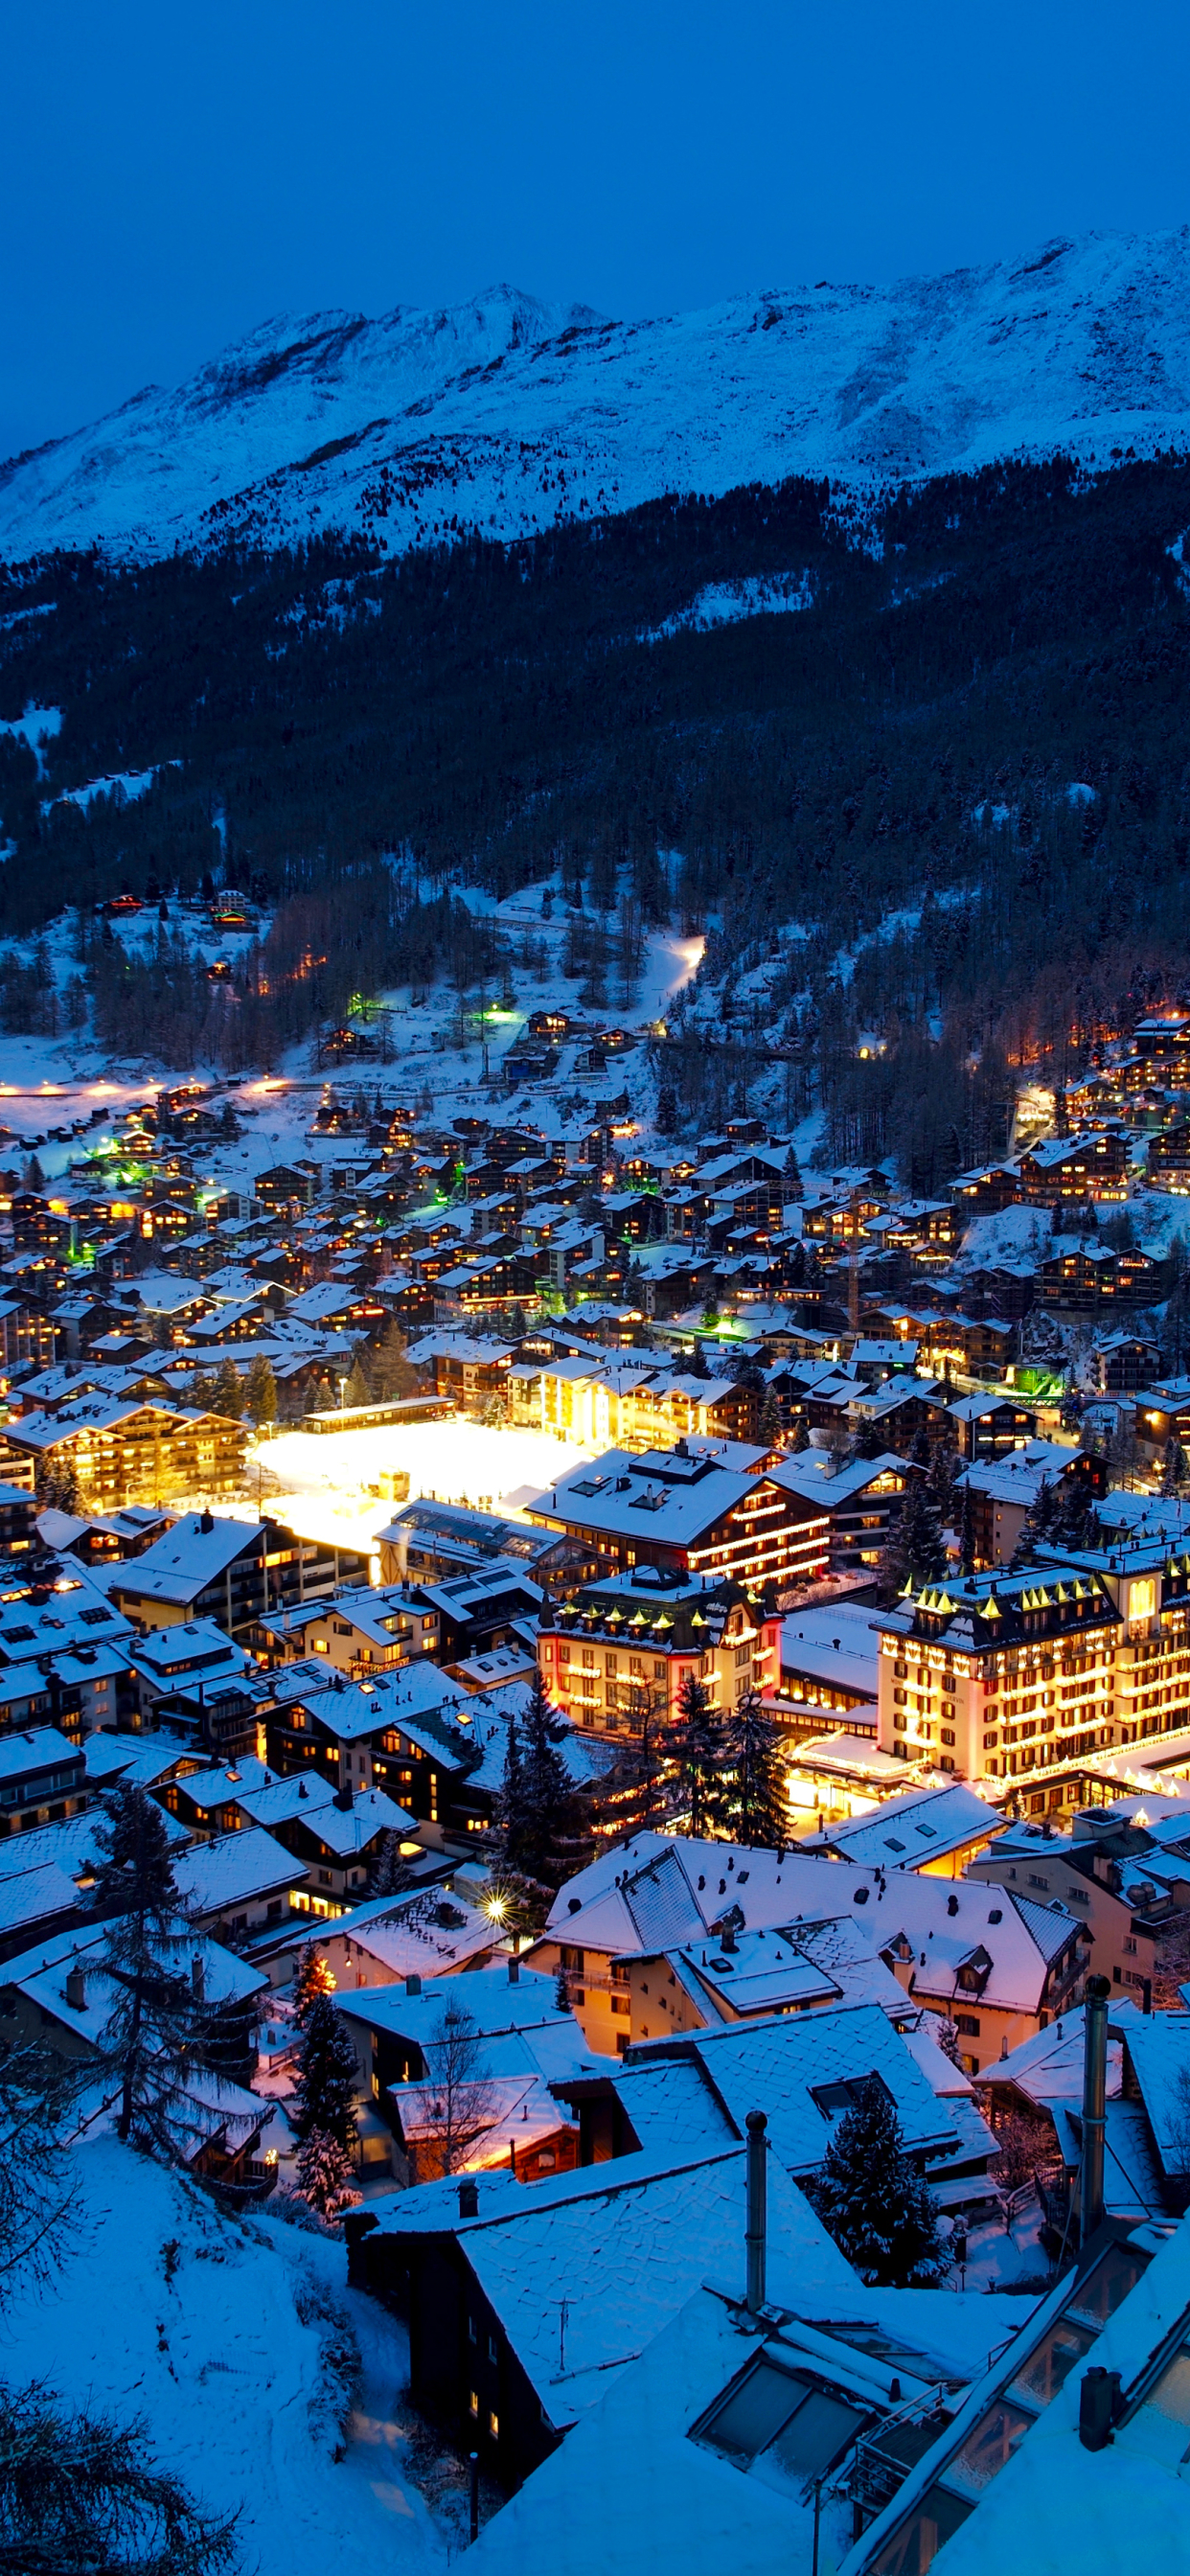 man made, zermatt, snow, alps, switzerland, light, winter, town, night, towns